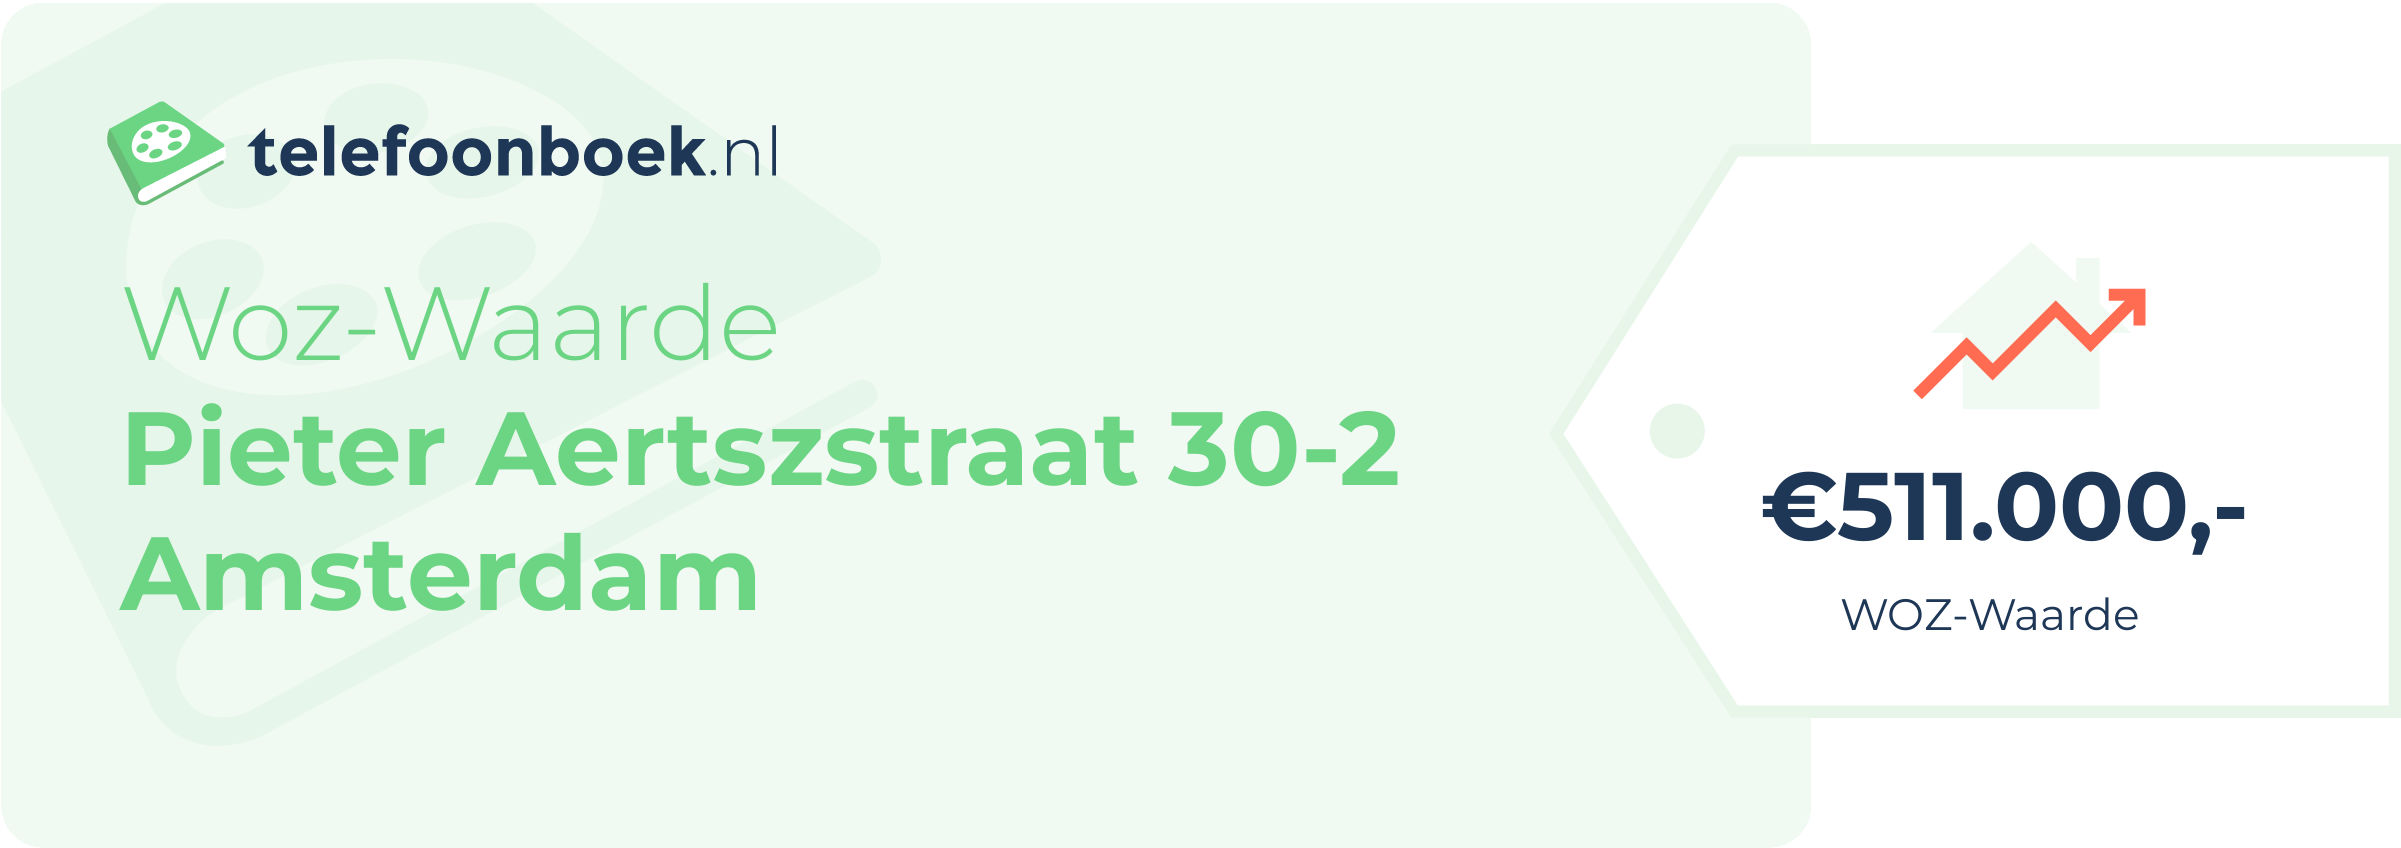 WOZ-waarde Pieter Aertszstraat 30-2 Amsterdam